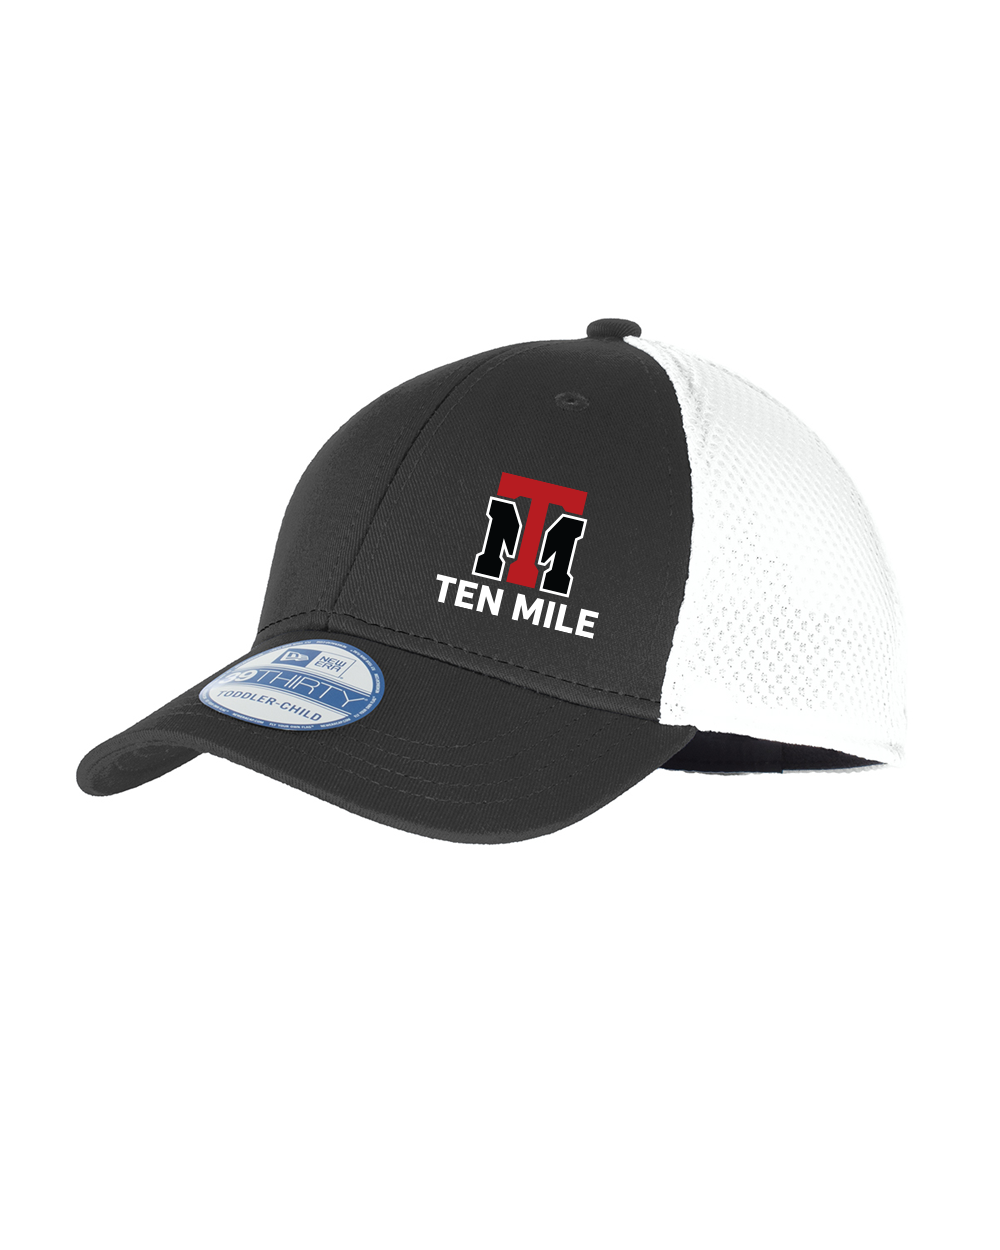 Ten Mile - New Era Youth Stretch Mesh Cap